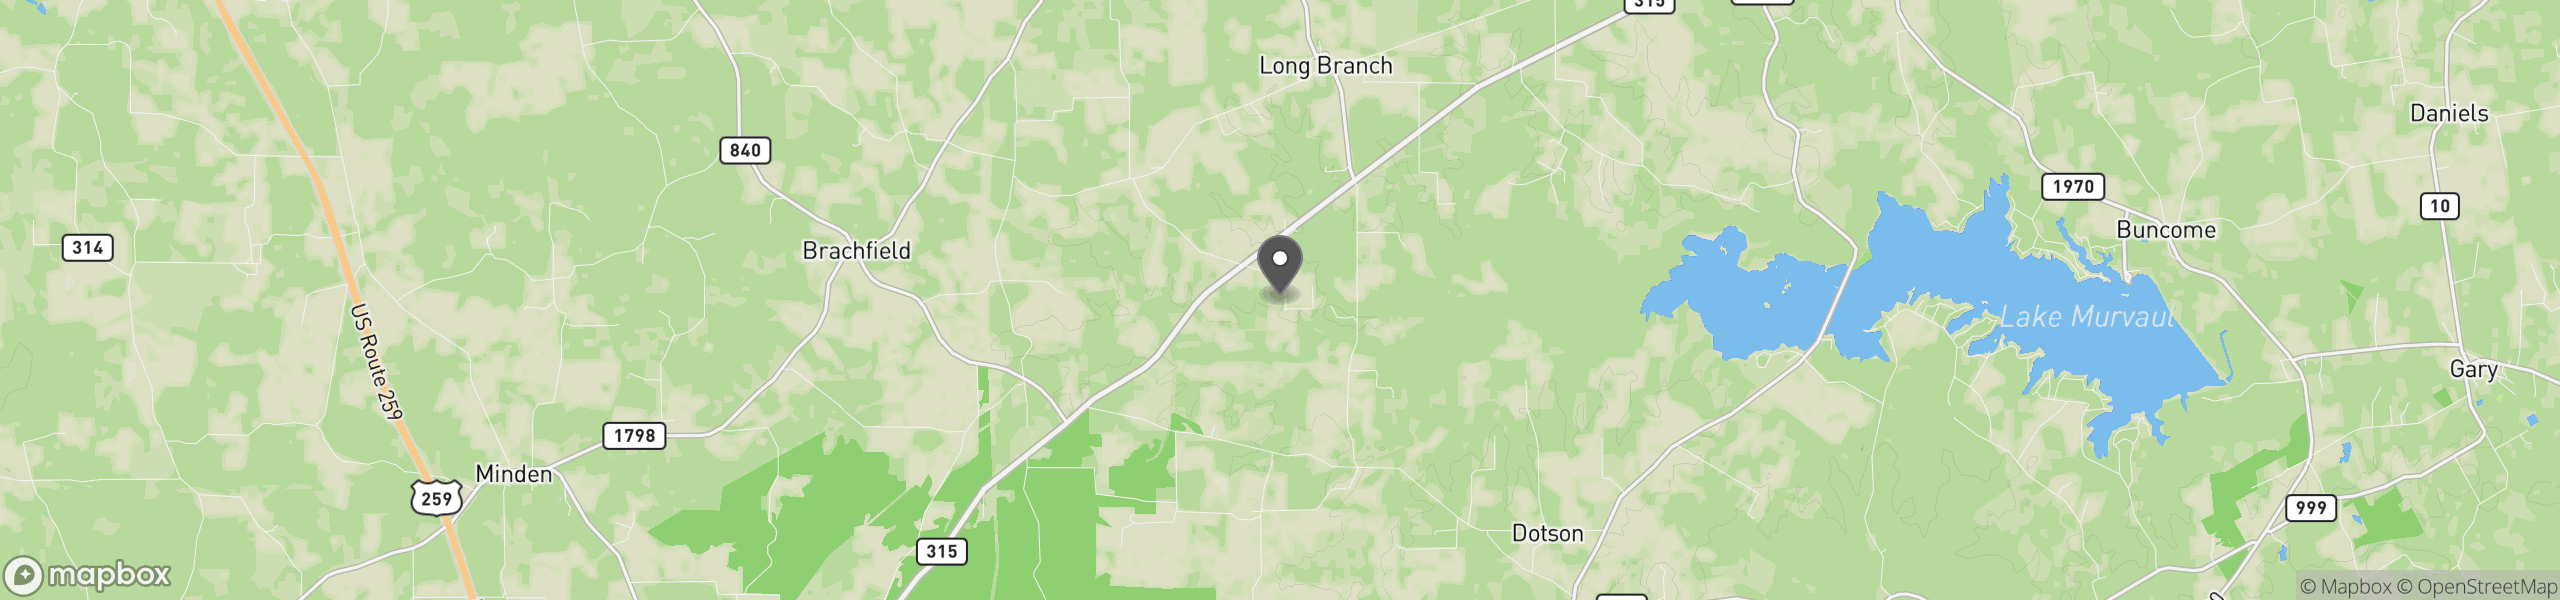 Long Branch, TX 75669